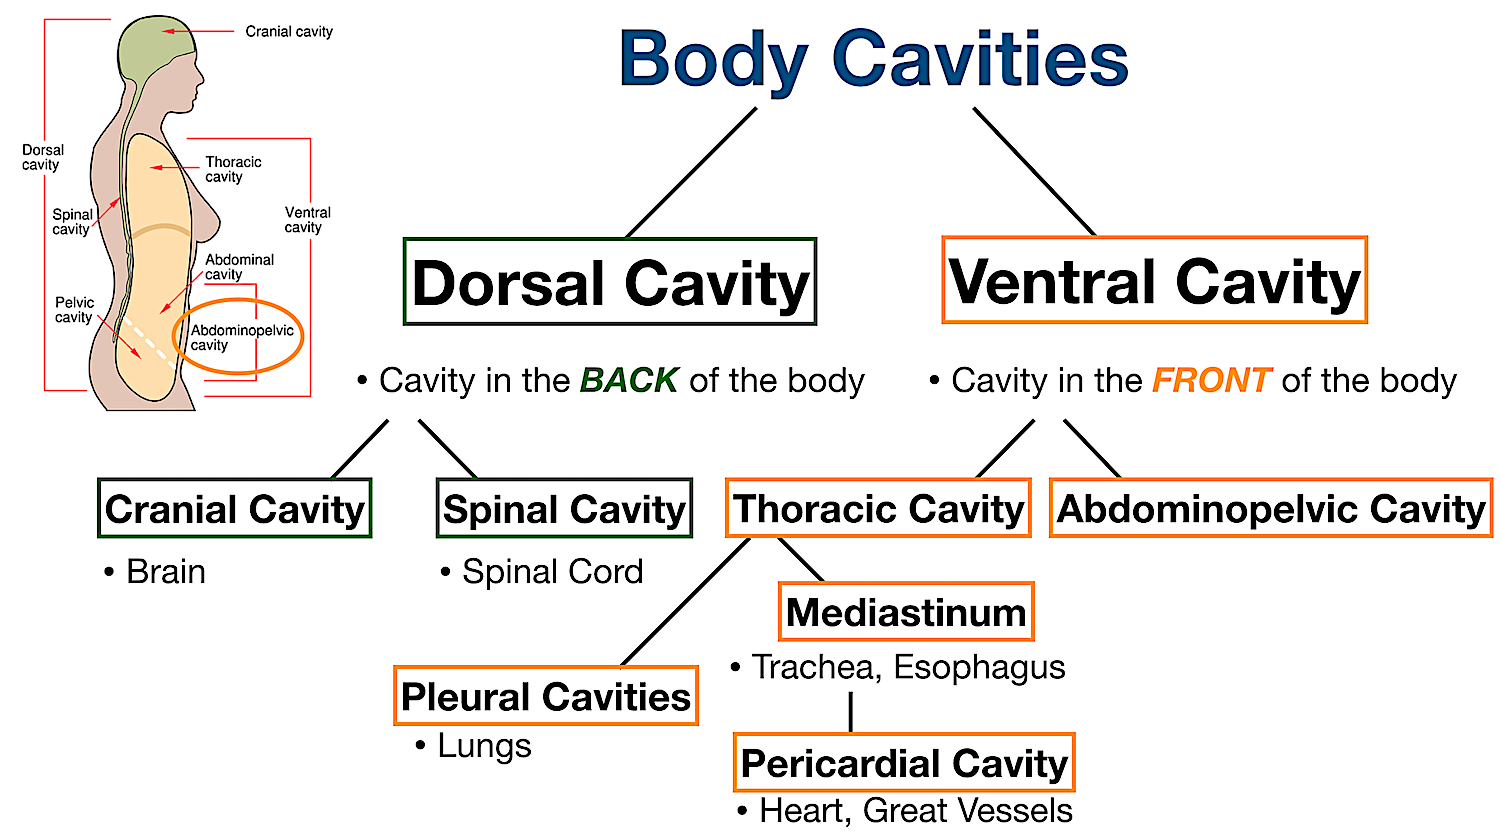 organ cavities